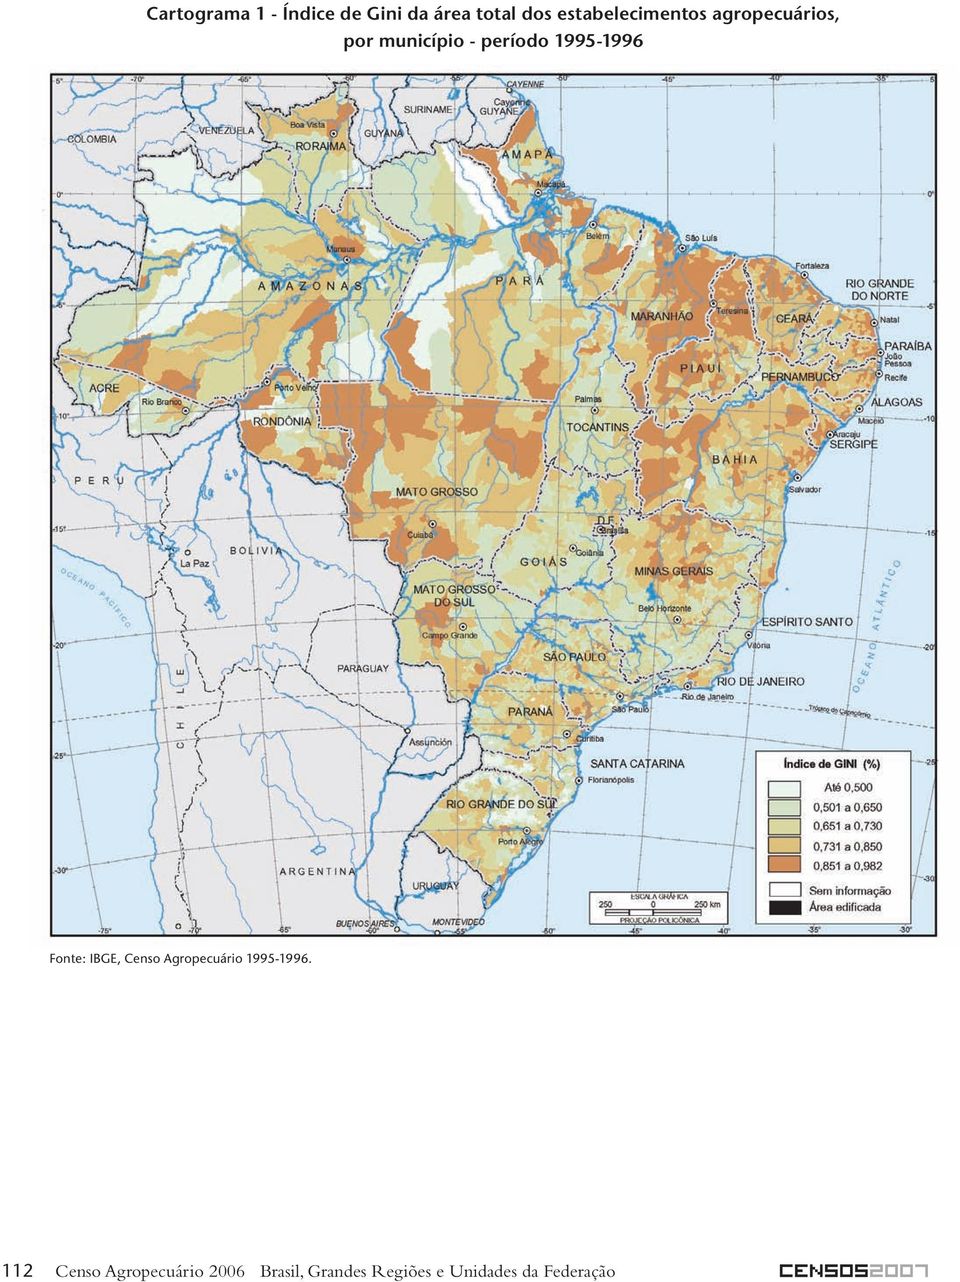 1995-1996 Fonte: IBGE, Censo Agropecuário 1995-1996.